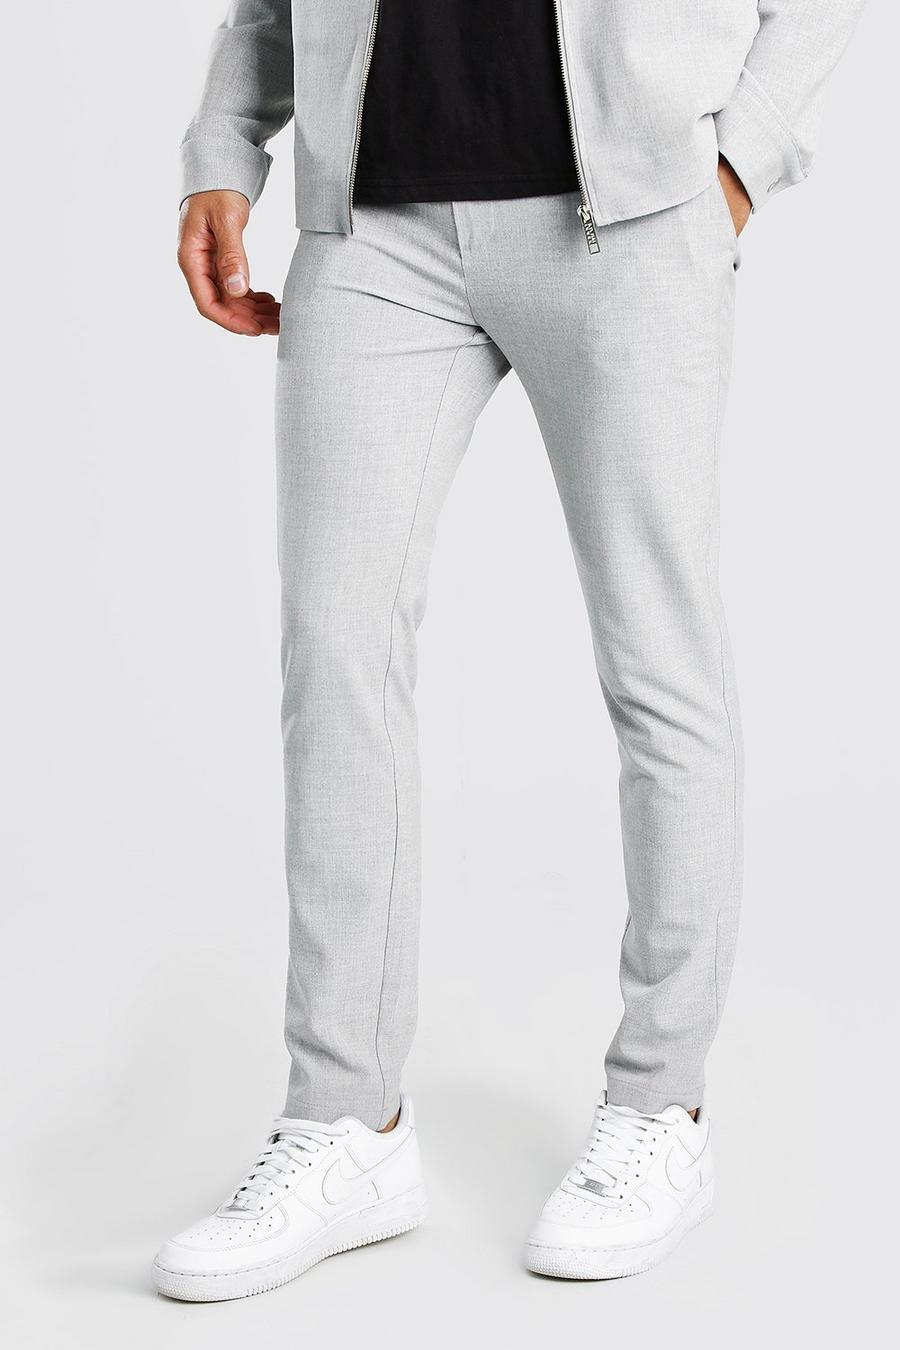 Pantalon habillé skinny uni, Light grey image number 1